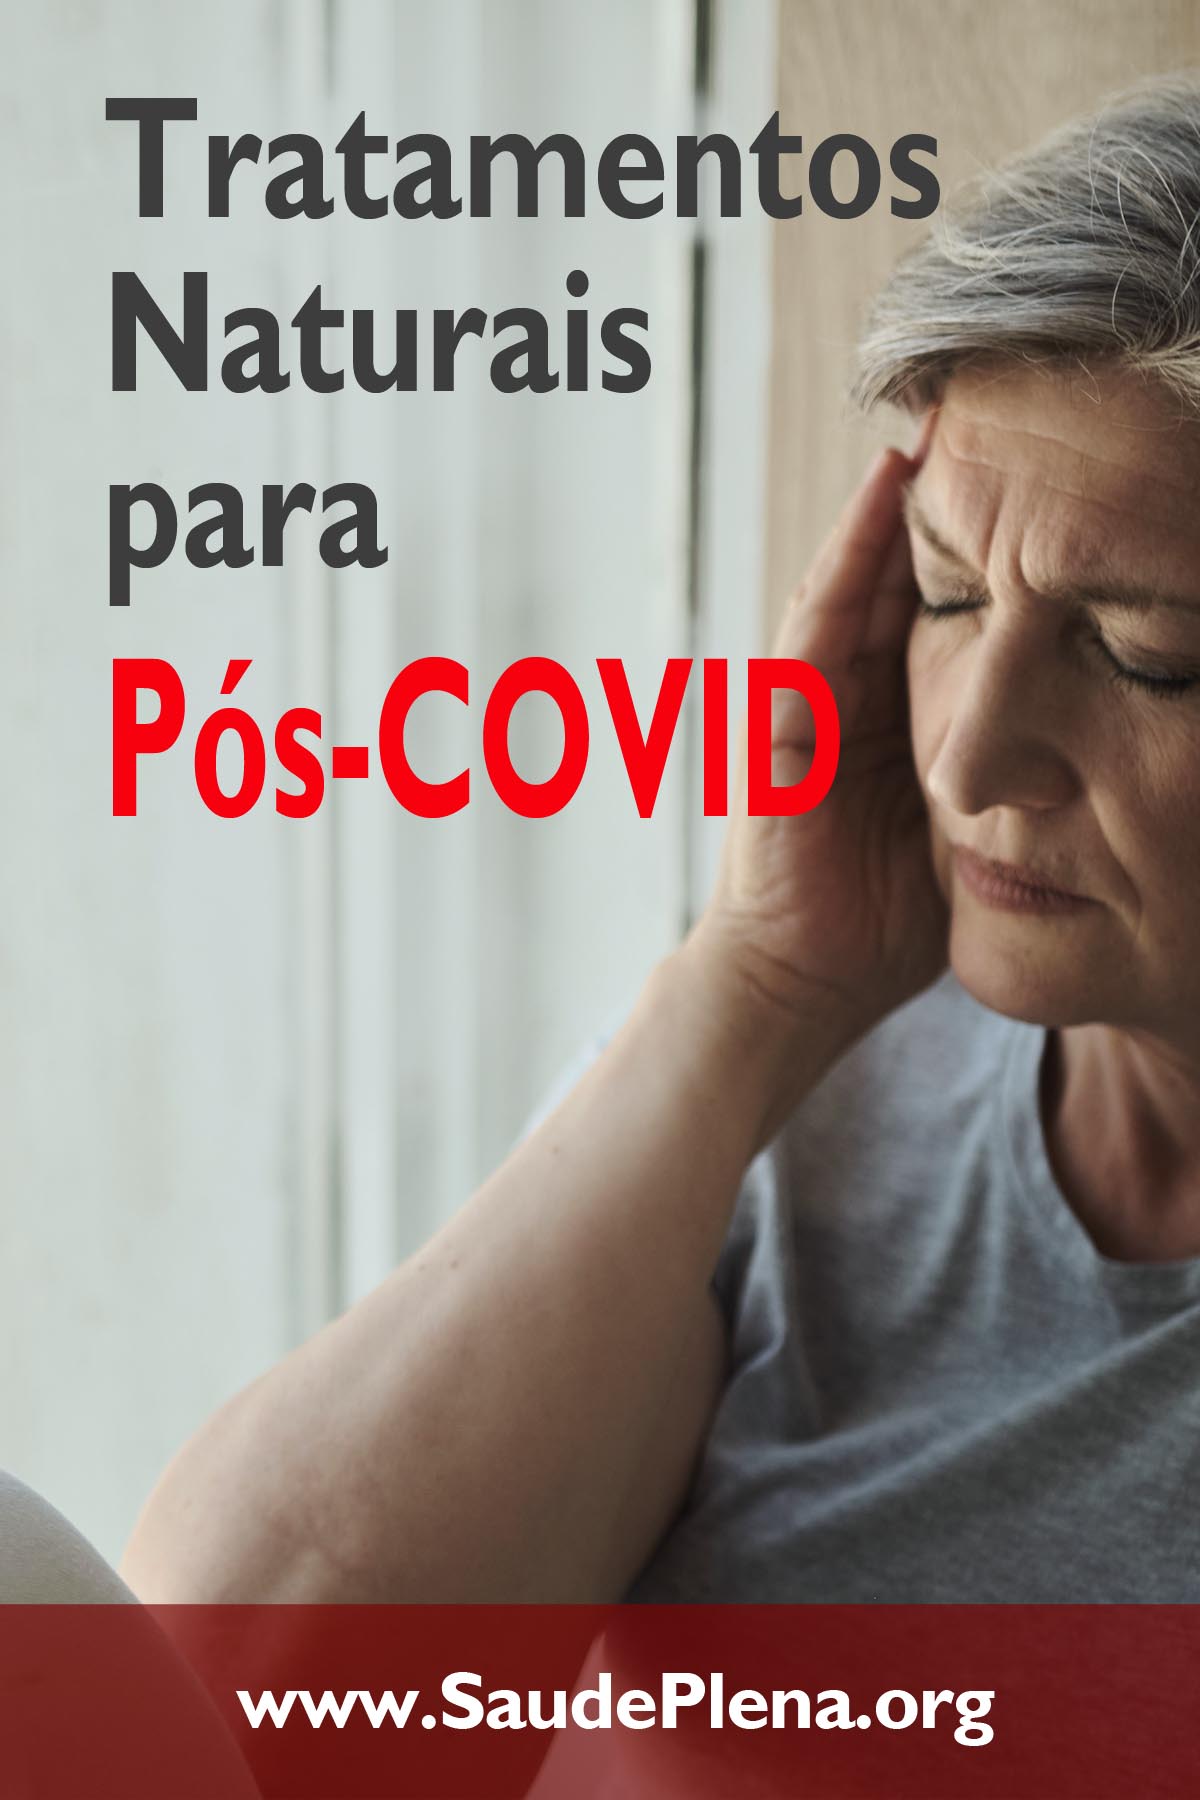 Tratamentos Naturais para Pós-COVID